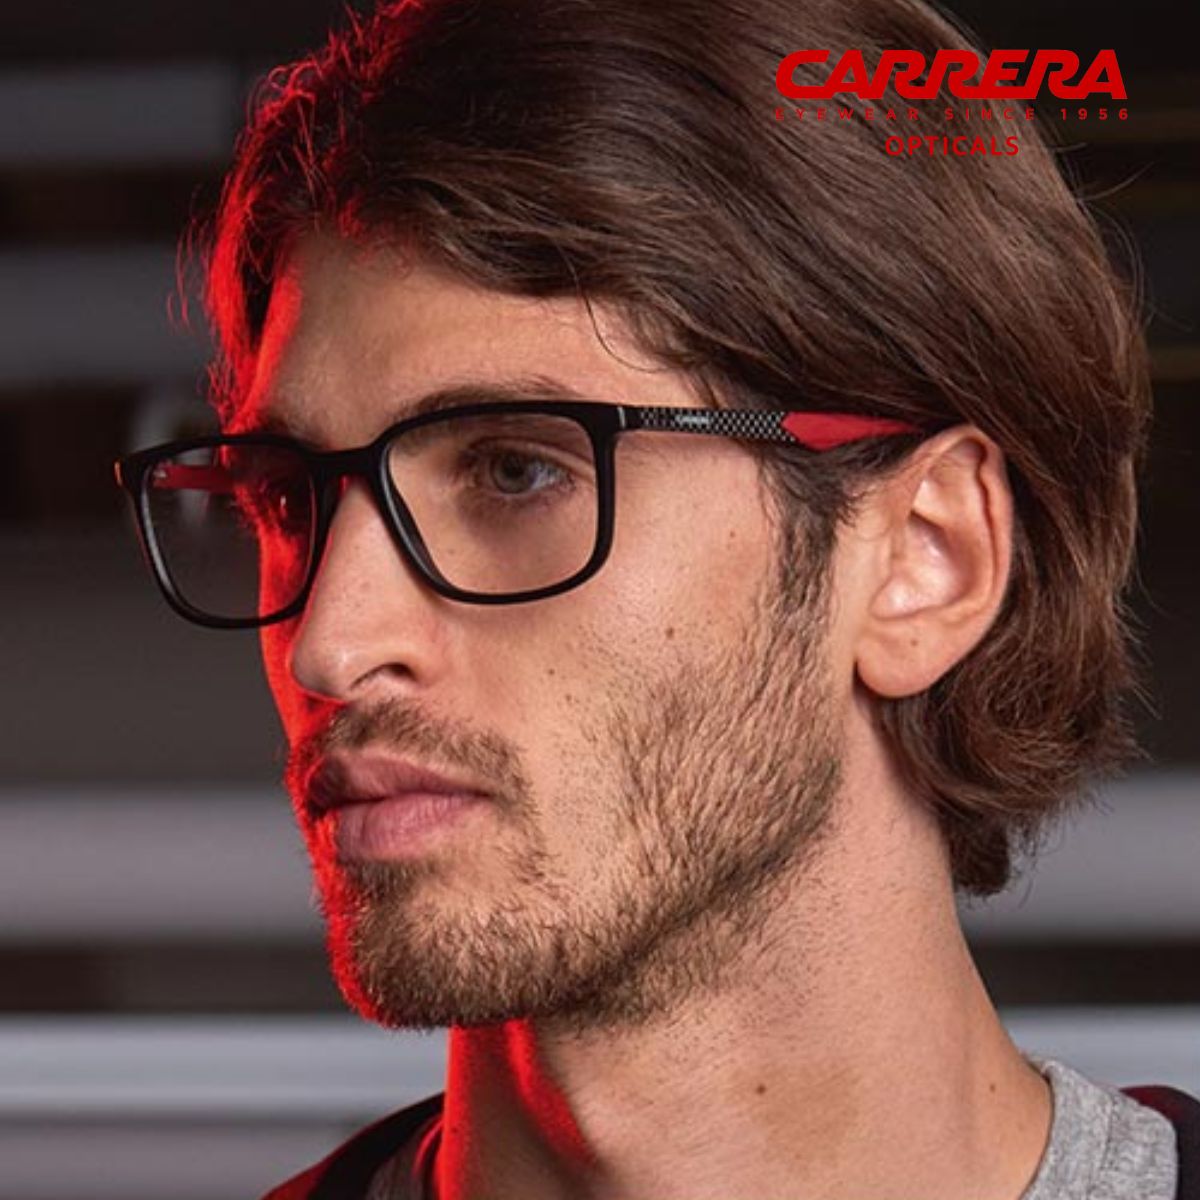 "Carrera eyeglasses collection at Optorium: premium designs for men and women."